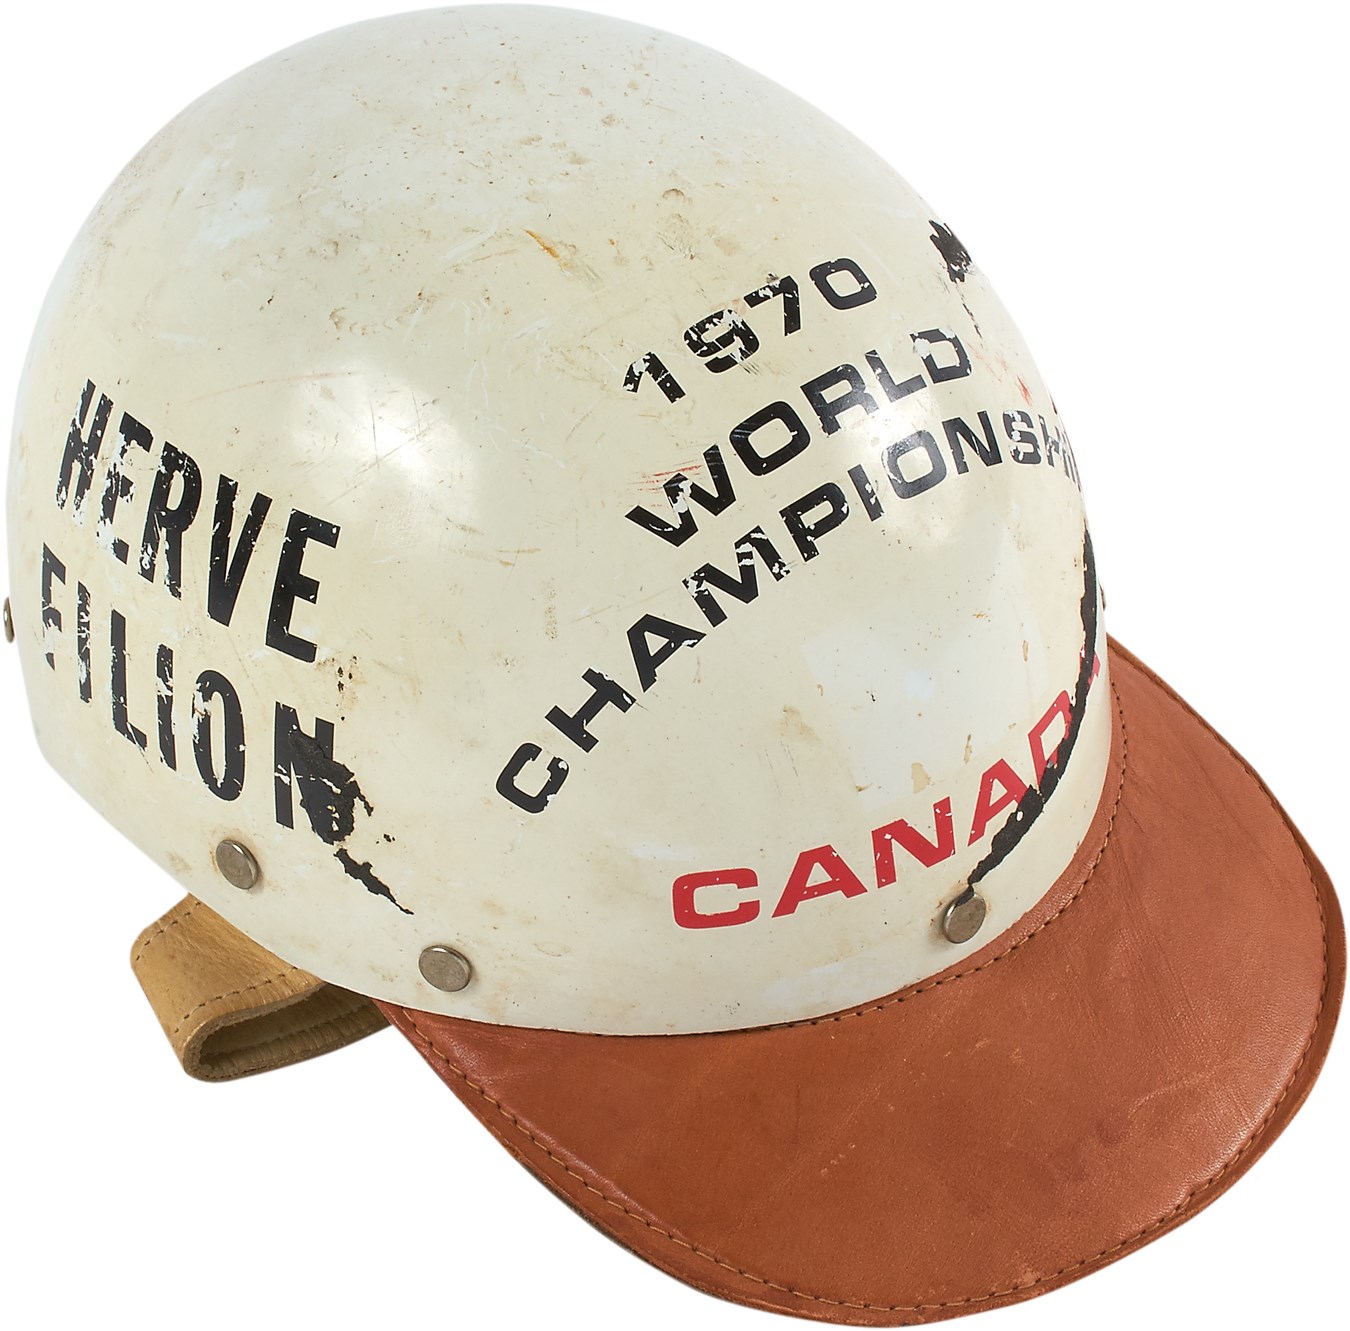 Historic 1970 Herve Filion Race Worn Helmet from Inaugural World Driving Championship